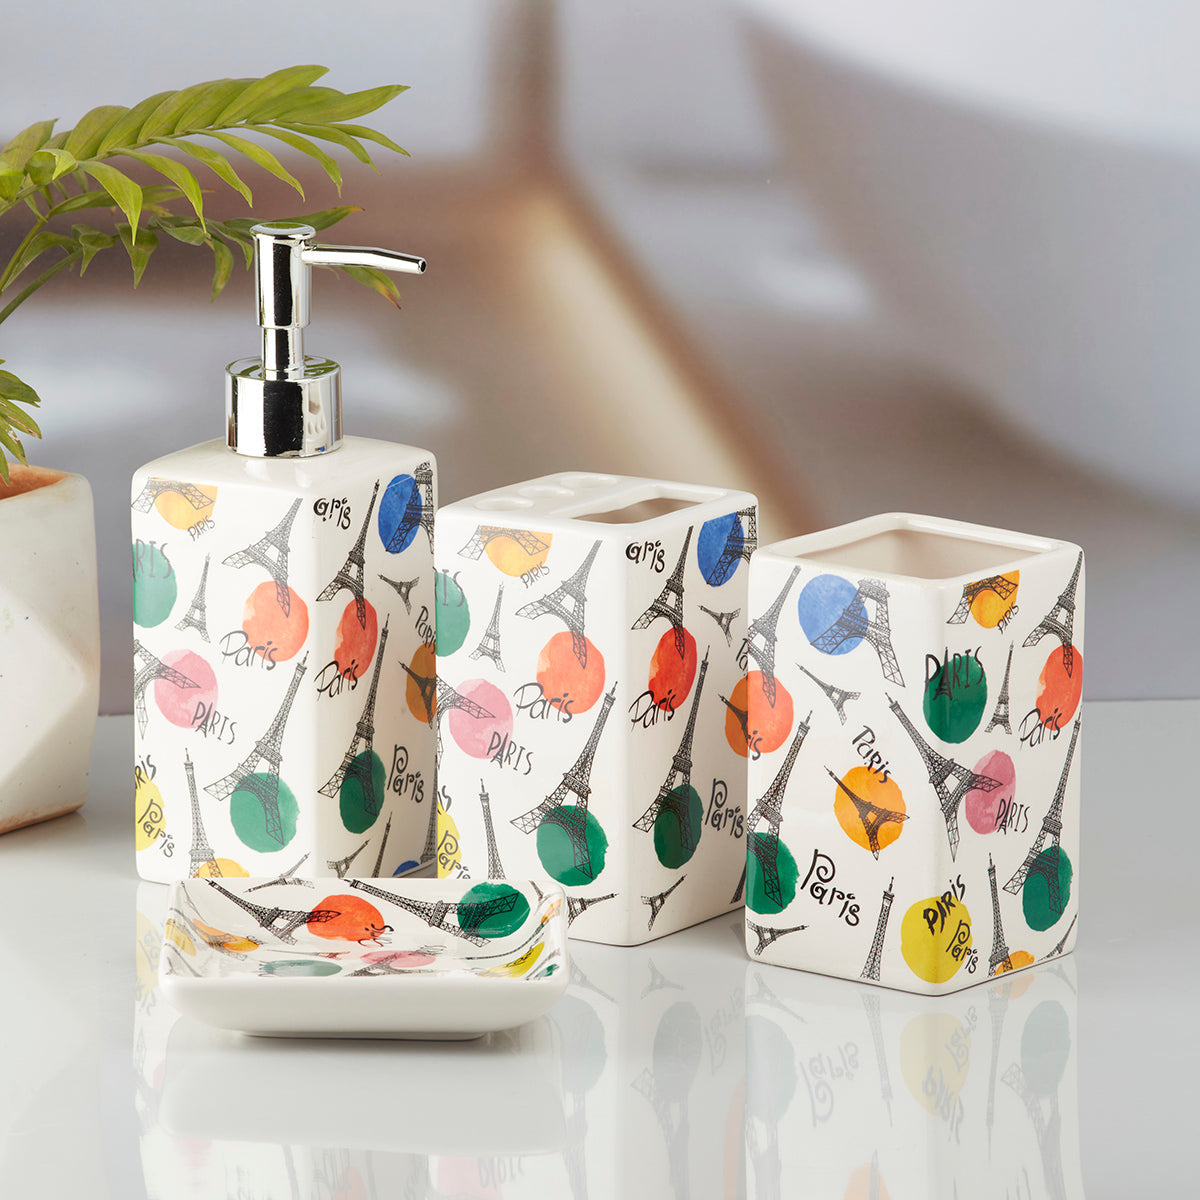 Ceramic Bathroom Accessories Set of 4 Bath Set with Soap Dispenser (9844)